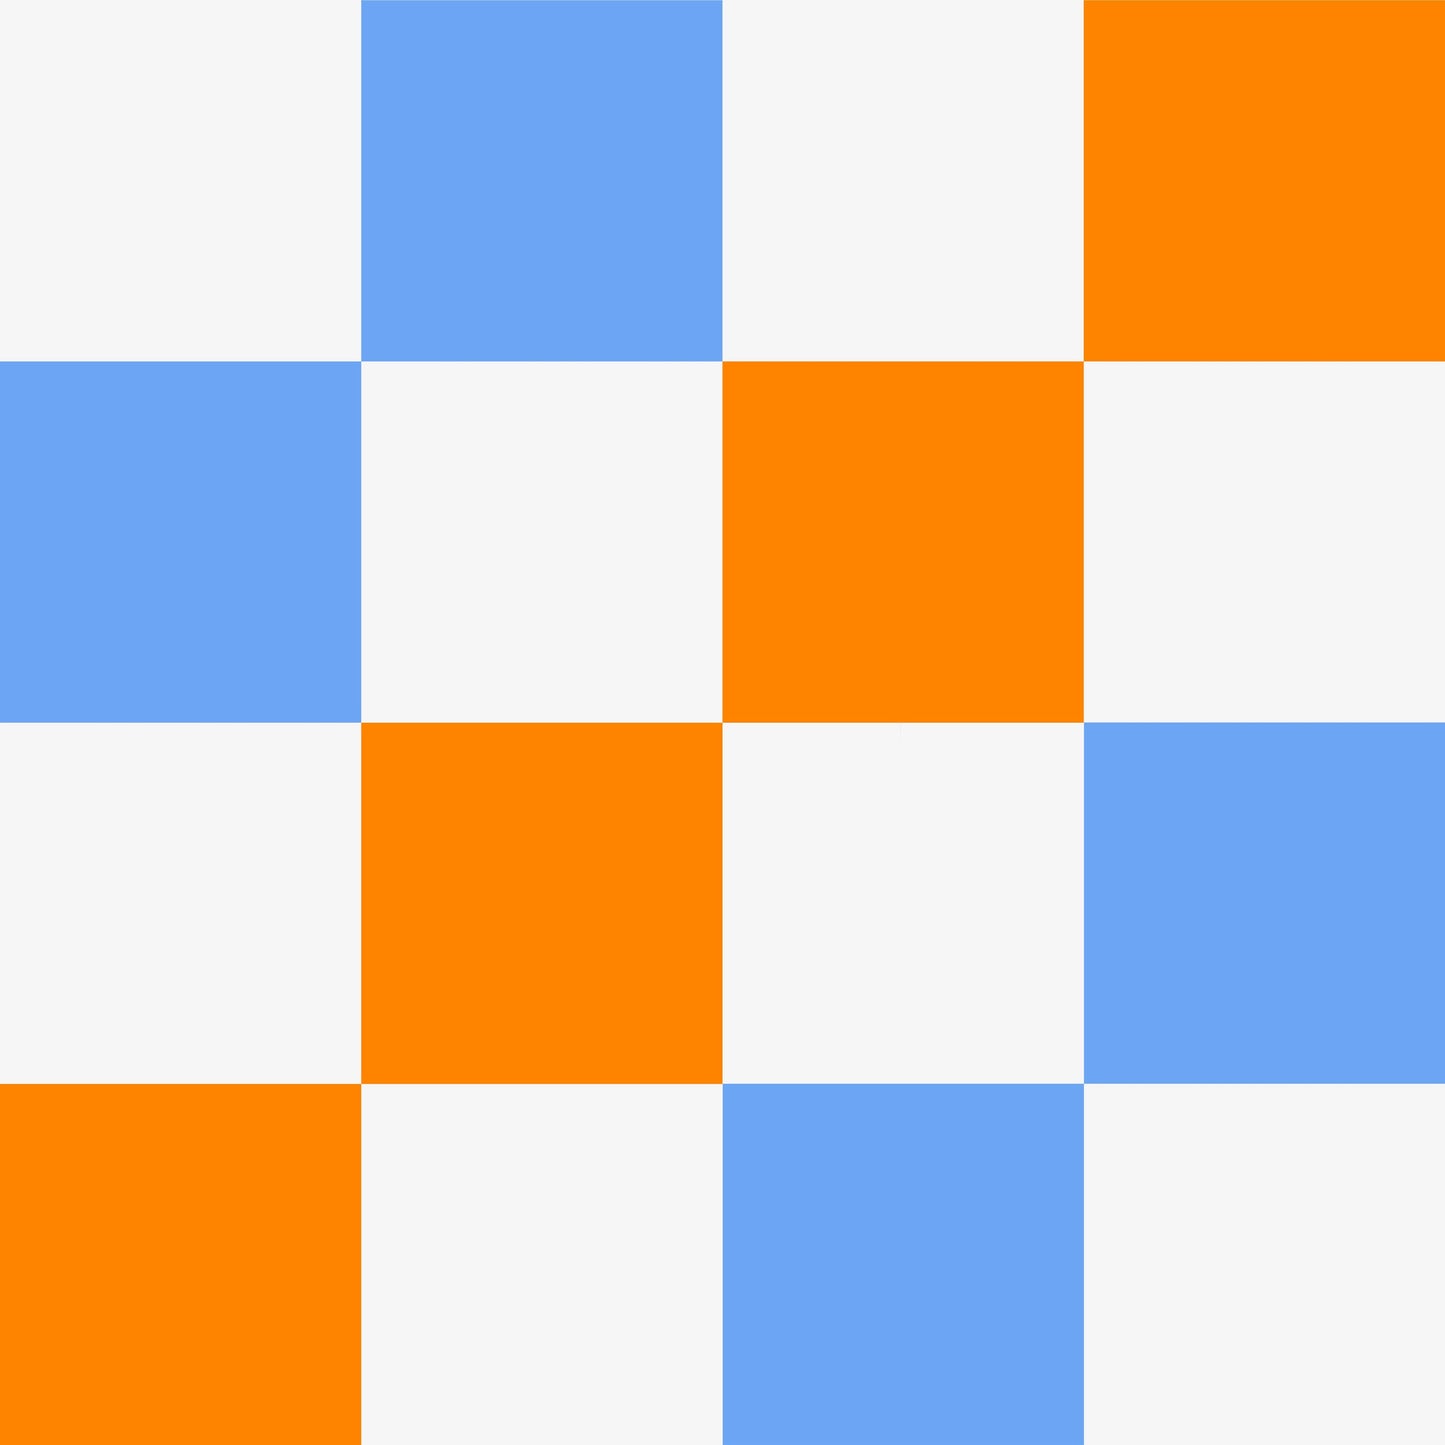 ‘Checkmate’ Checkerboard Kids’ Wallpaper in Scandi Blue and Orange